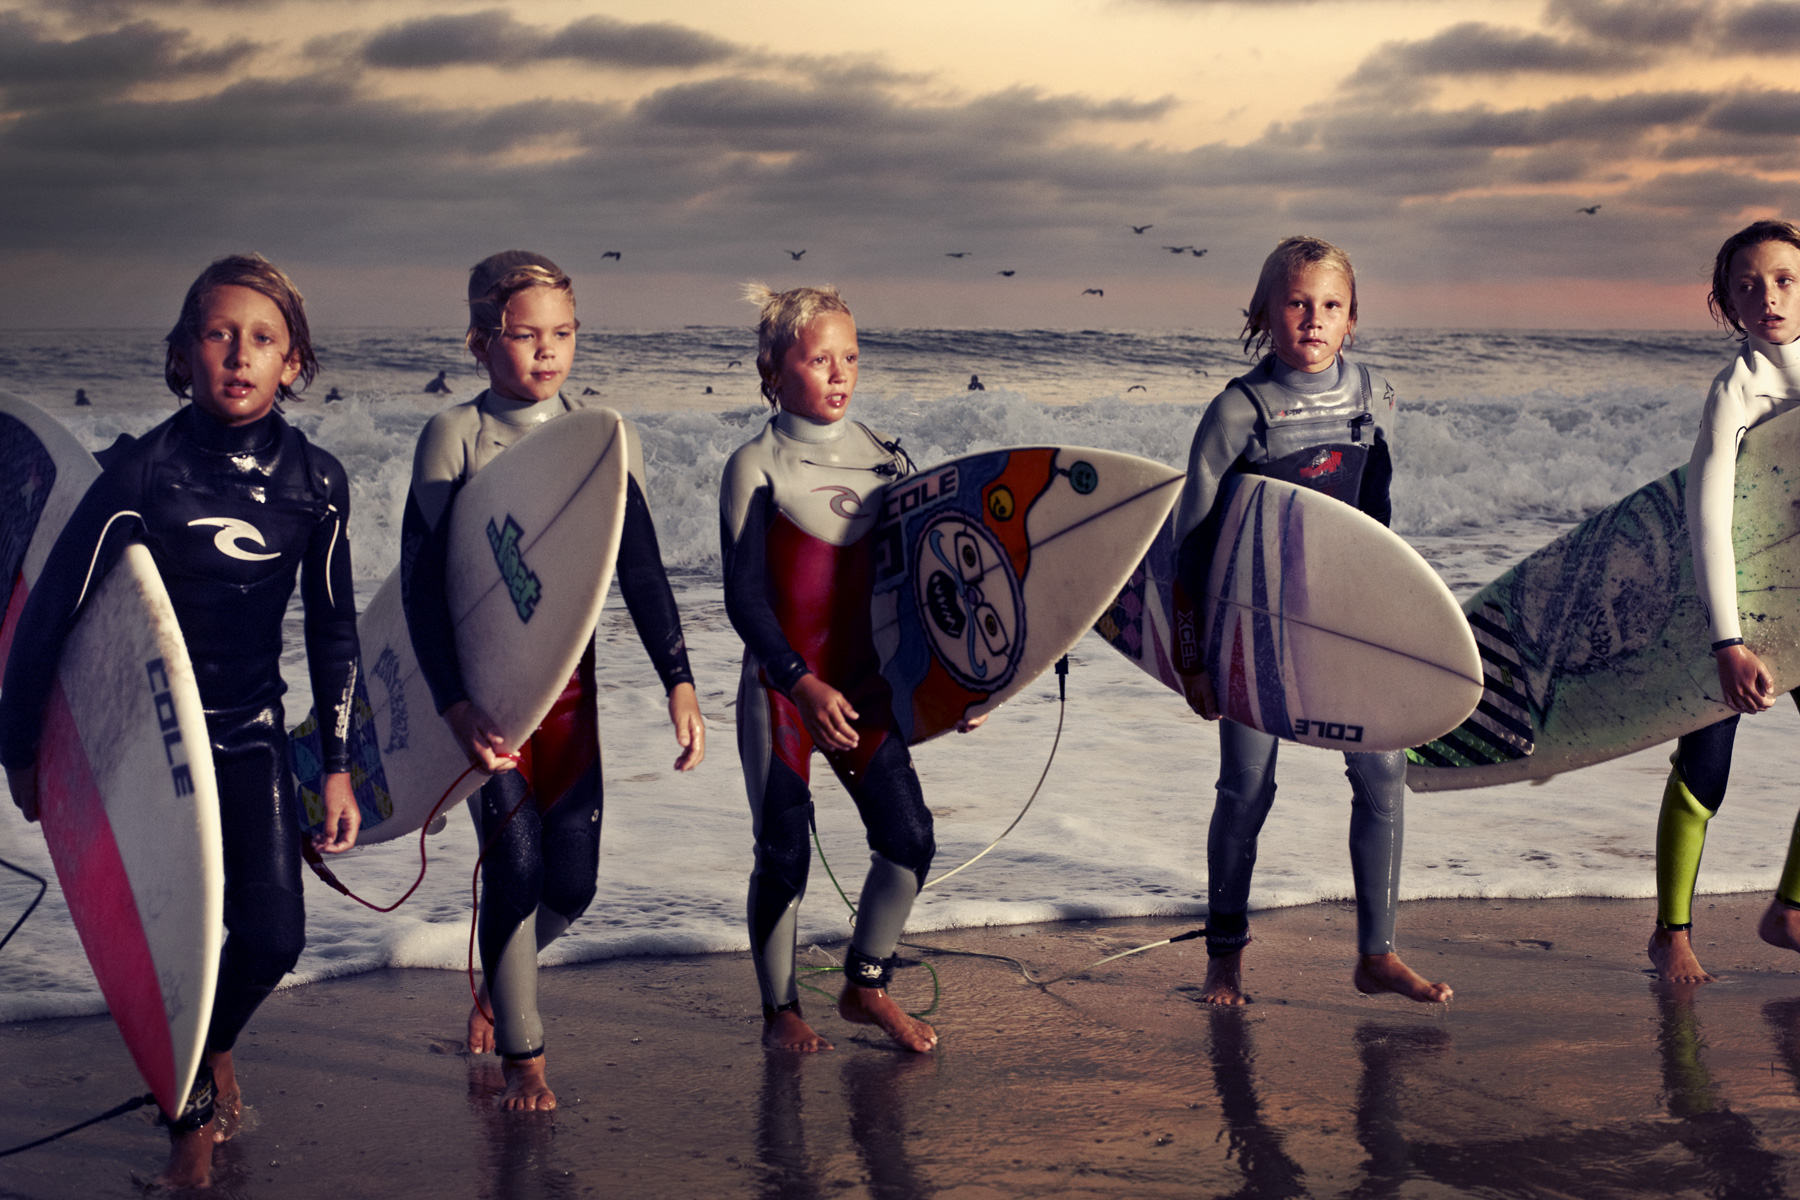 Surf Kids of San Clemente photographed by Scott Council